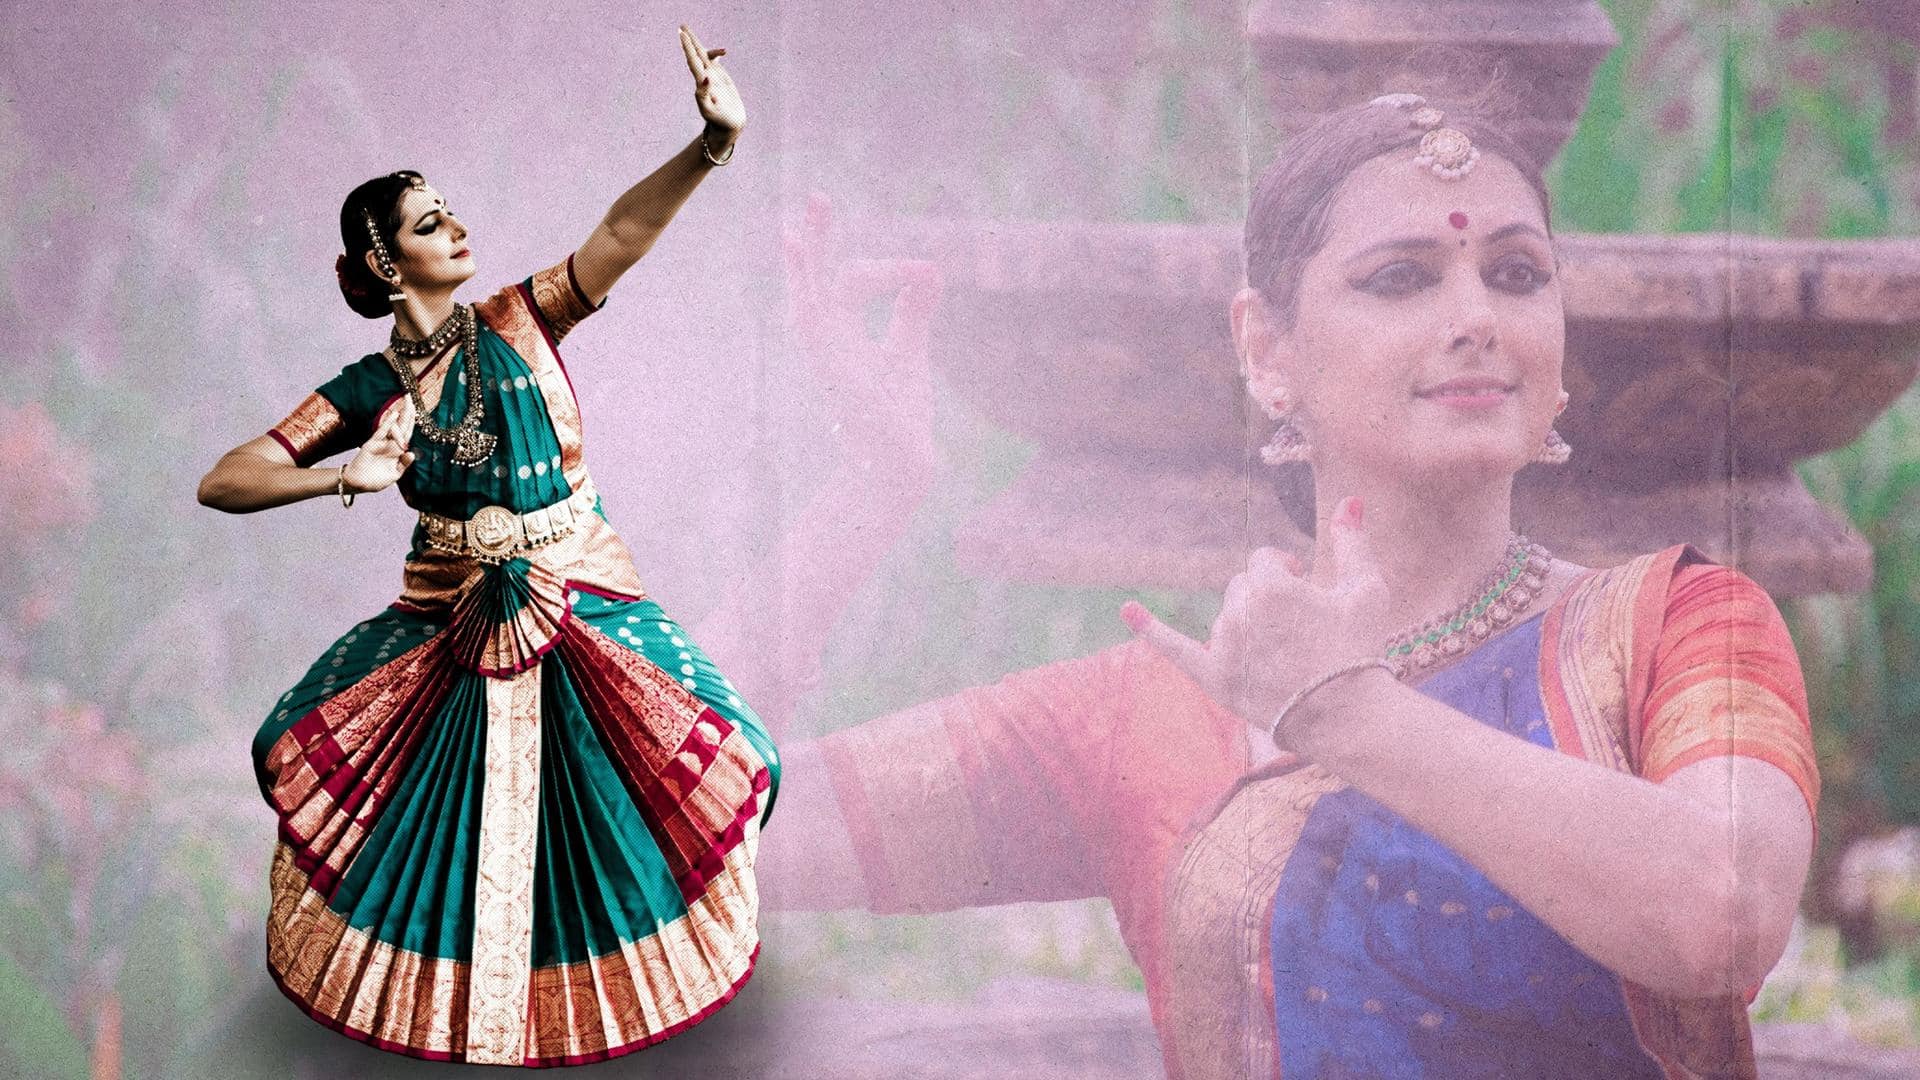 Apeksha Niranjan: Pushing boundaries with unique Bharatanatyam performances 